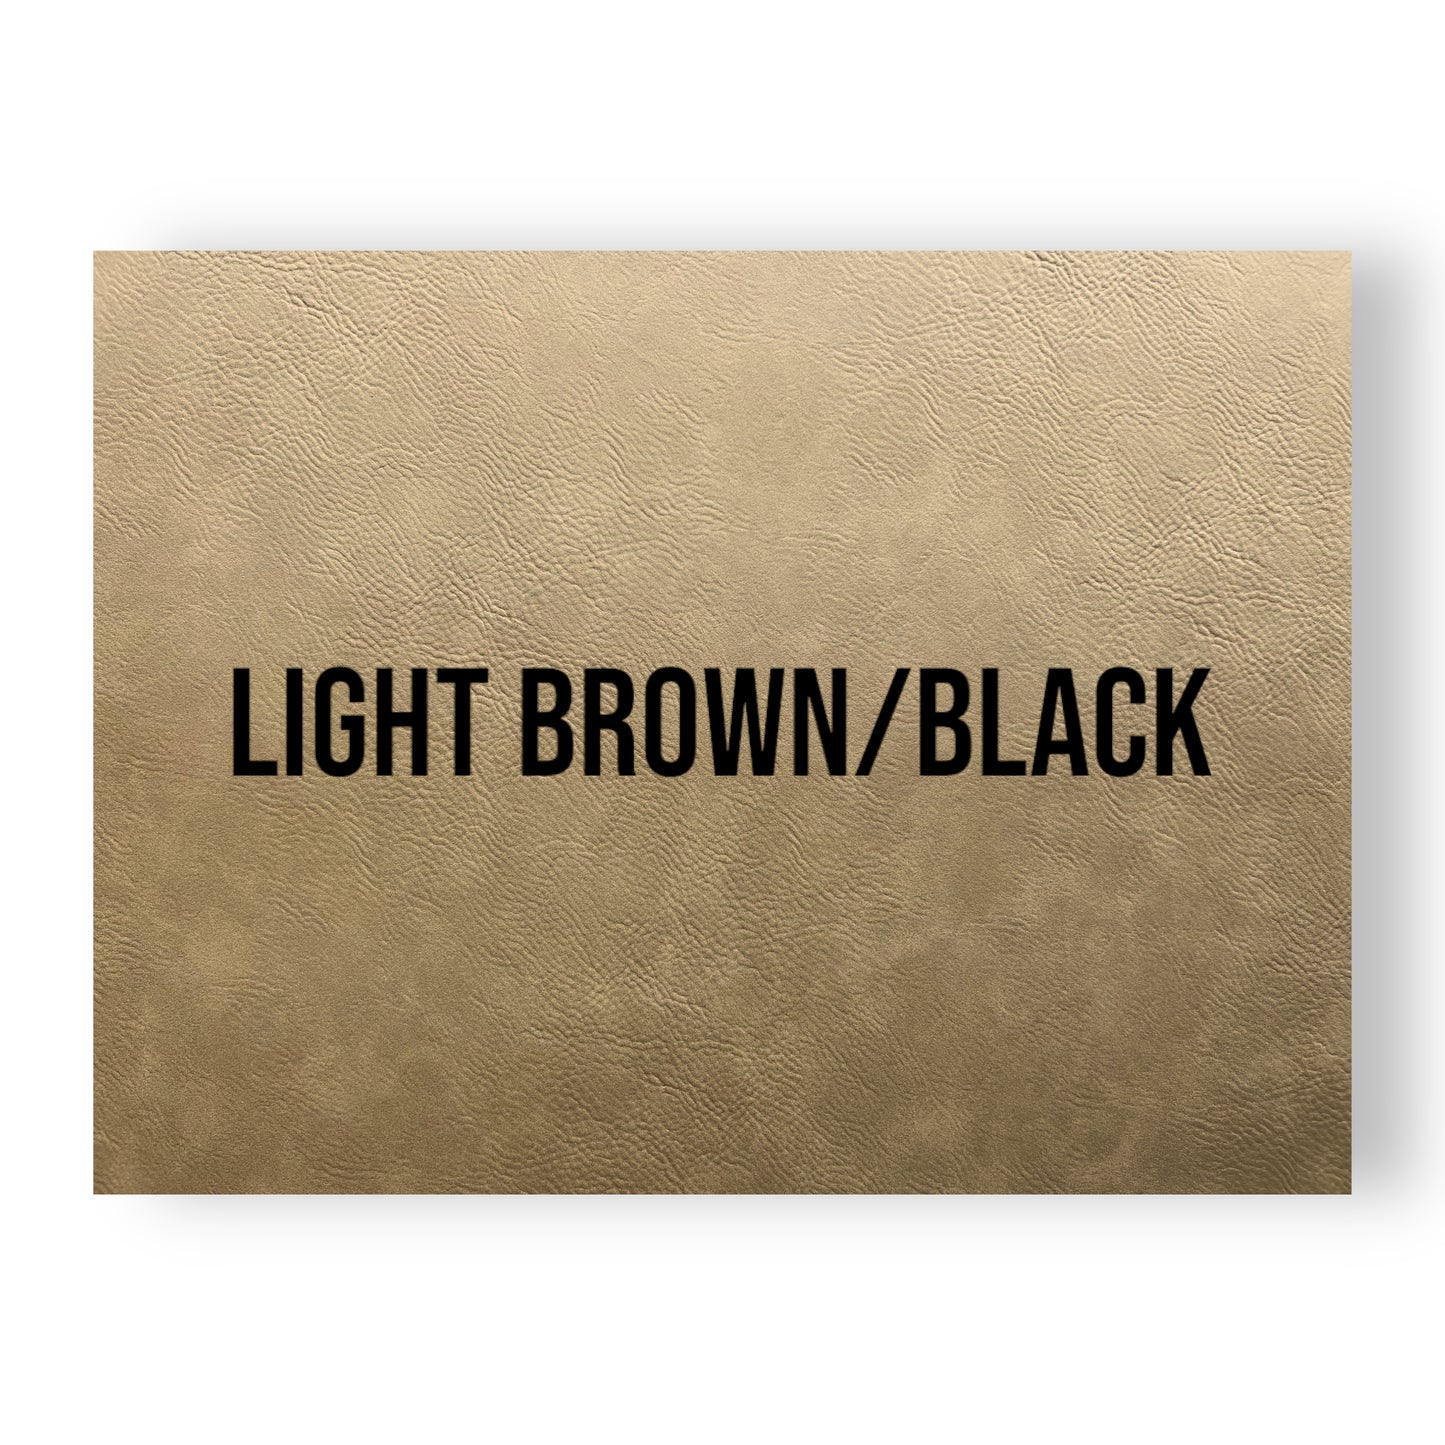 LIGHT BROWN/BLACK HYDBOND’D LEATHERETTE SHEET (12"x24")